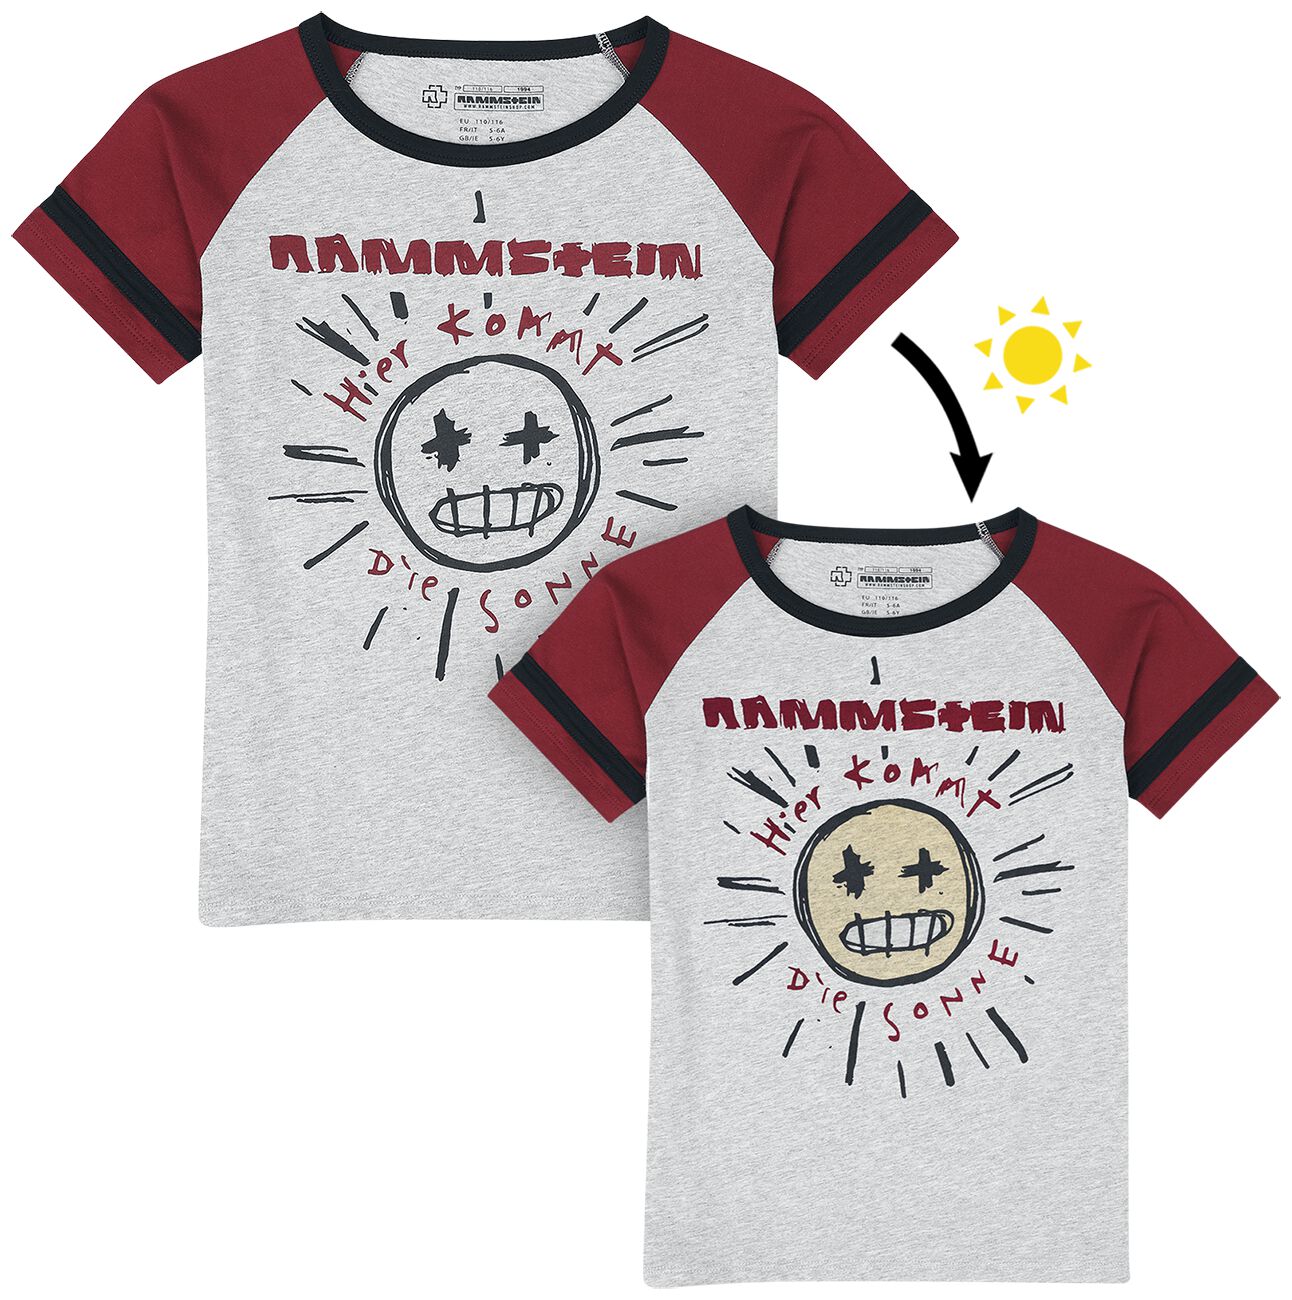 Rammstein - Kids - Sonne - T-Shirt - grau|rot